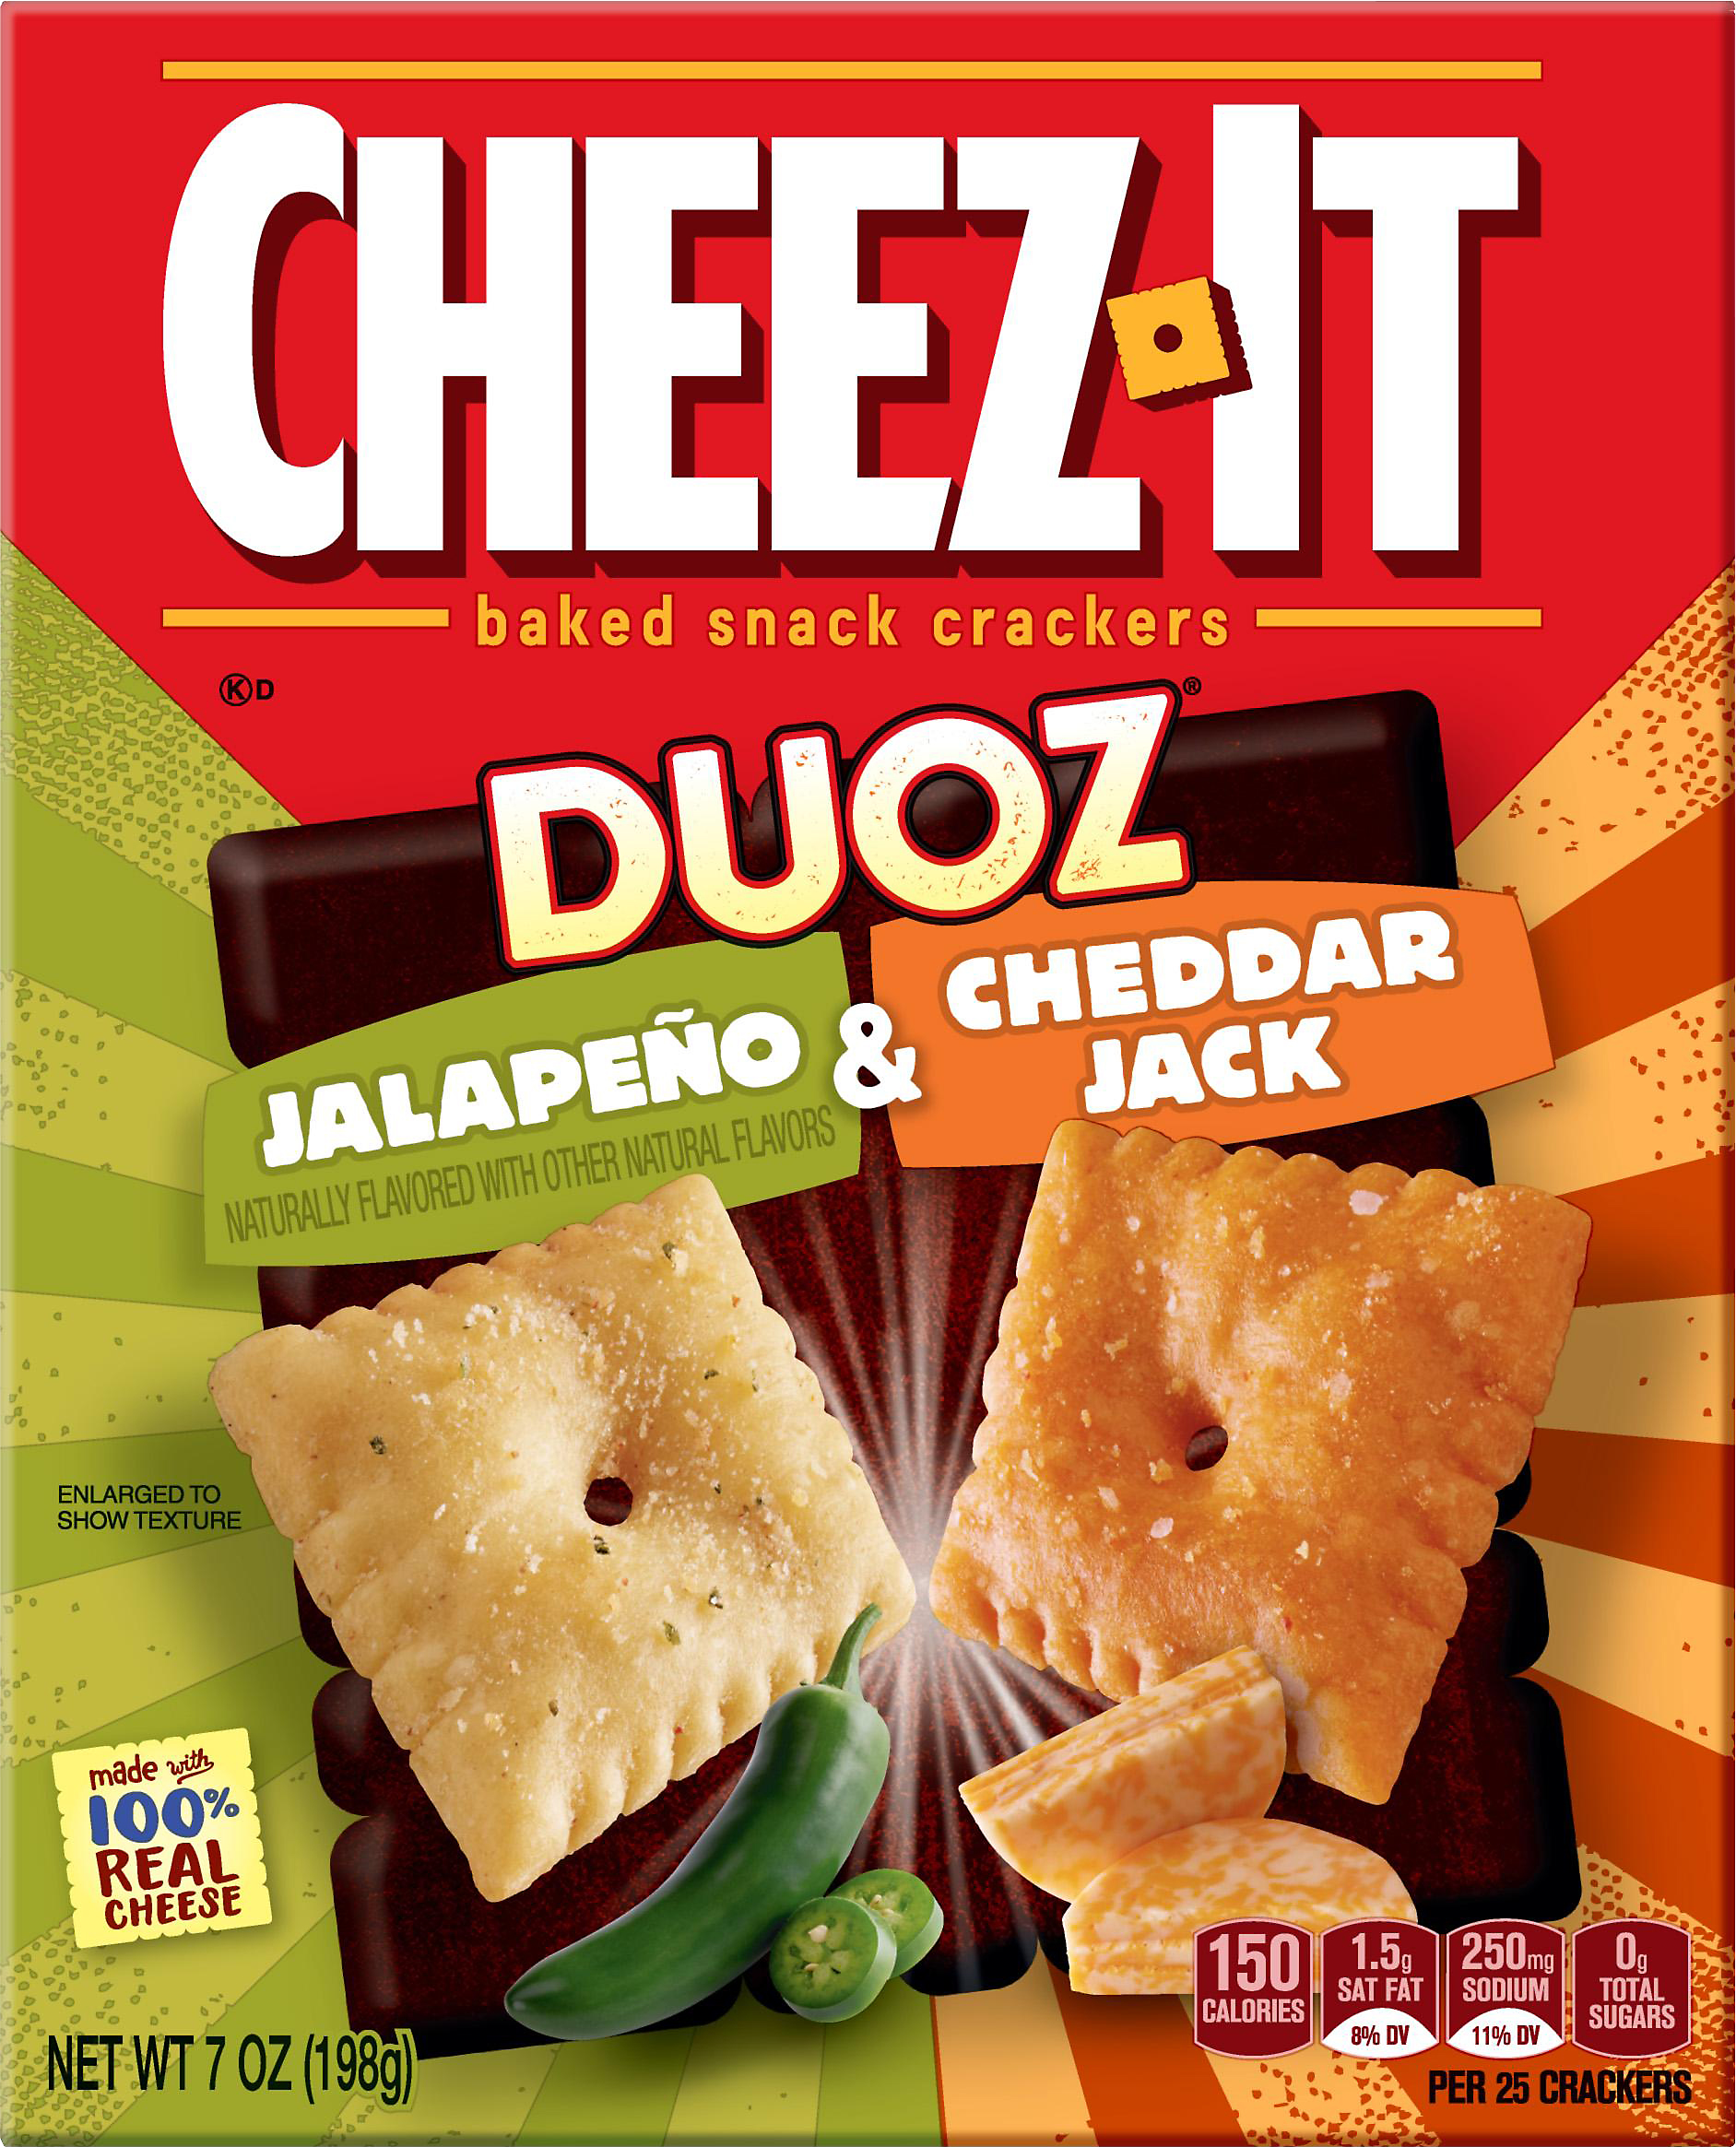 Cheez-It Duoz Jalapeno & Cheddar Jack Baked Snack Crackers 7 oz